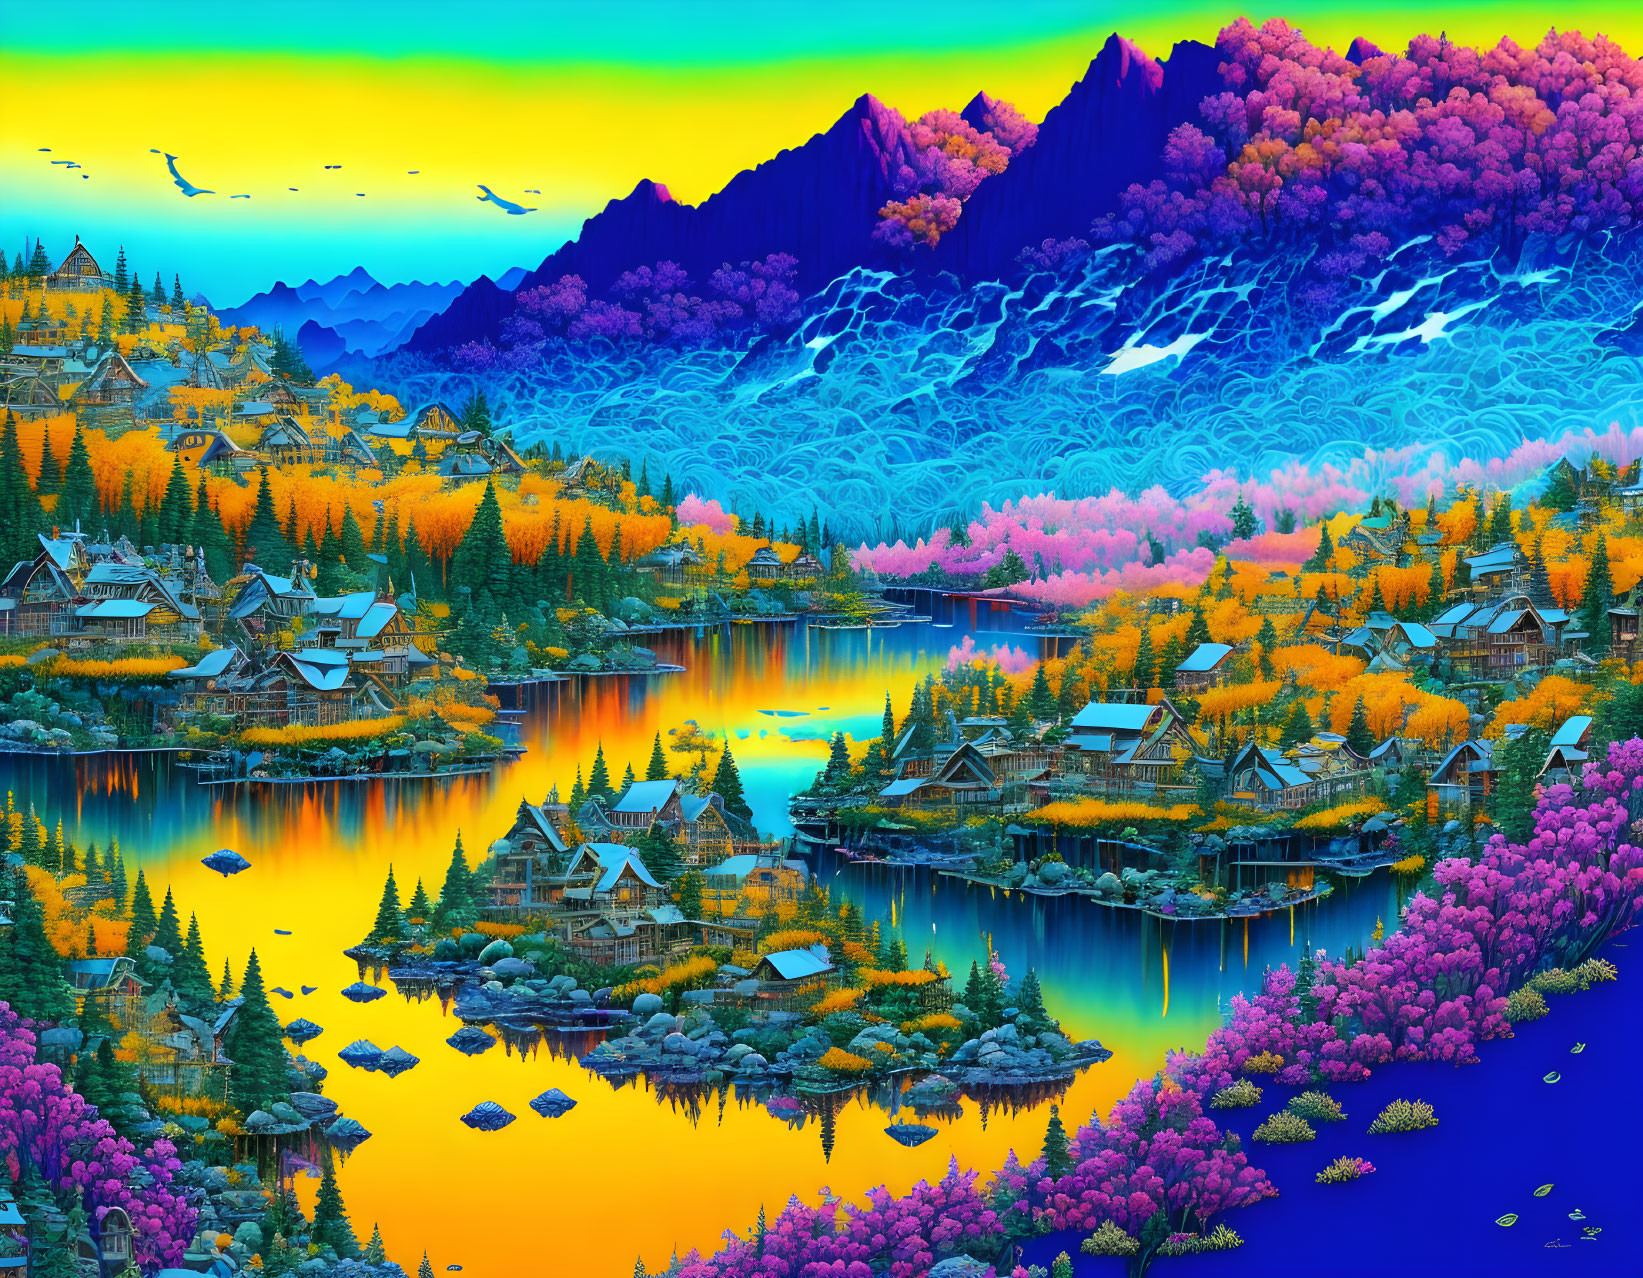 Colorful Illustration: Fantastical Village by Reflective Lake